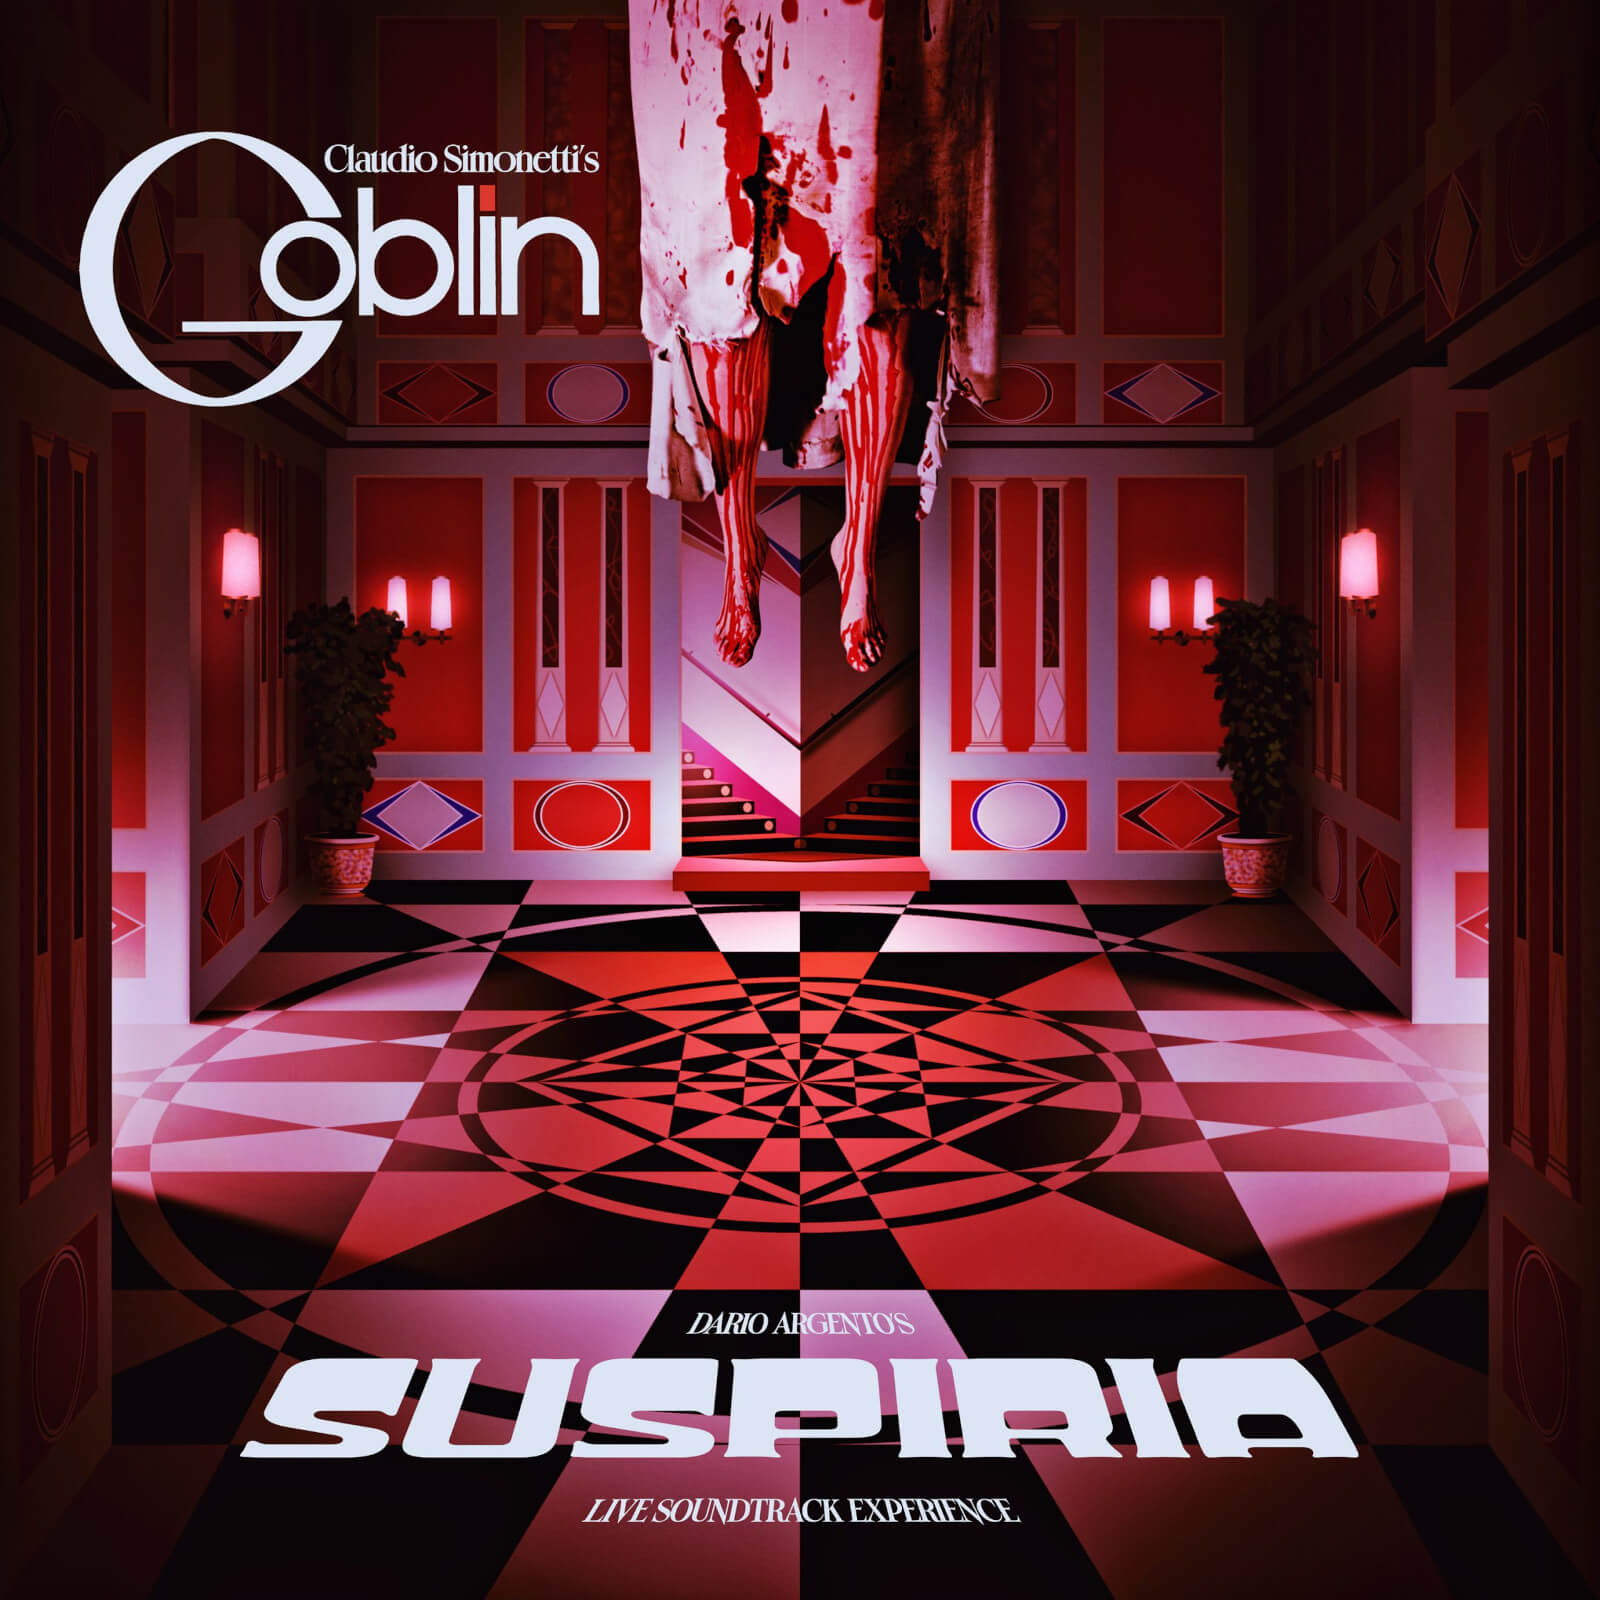 Suspiria: Live Soundtrack Experience Vinyl (Red)